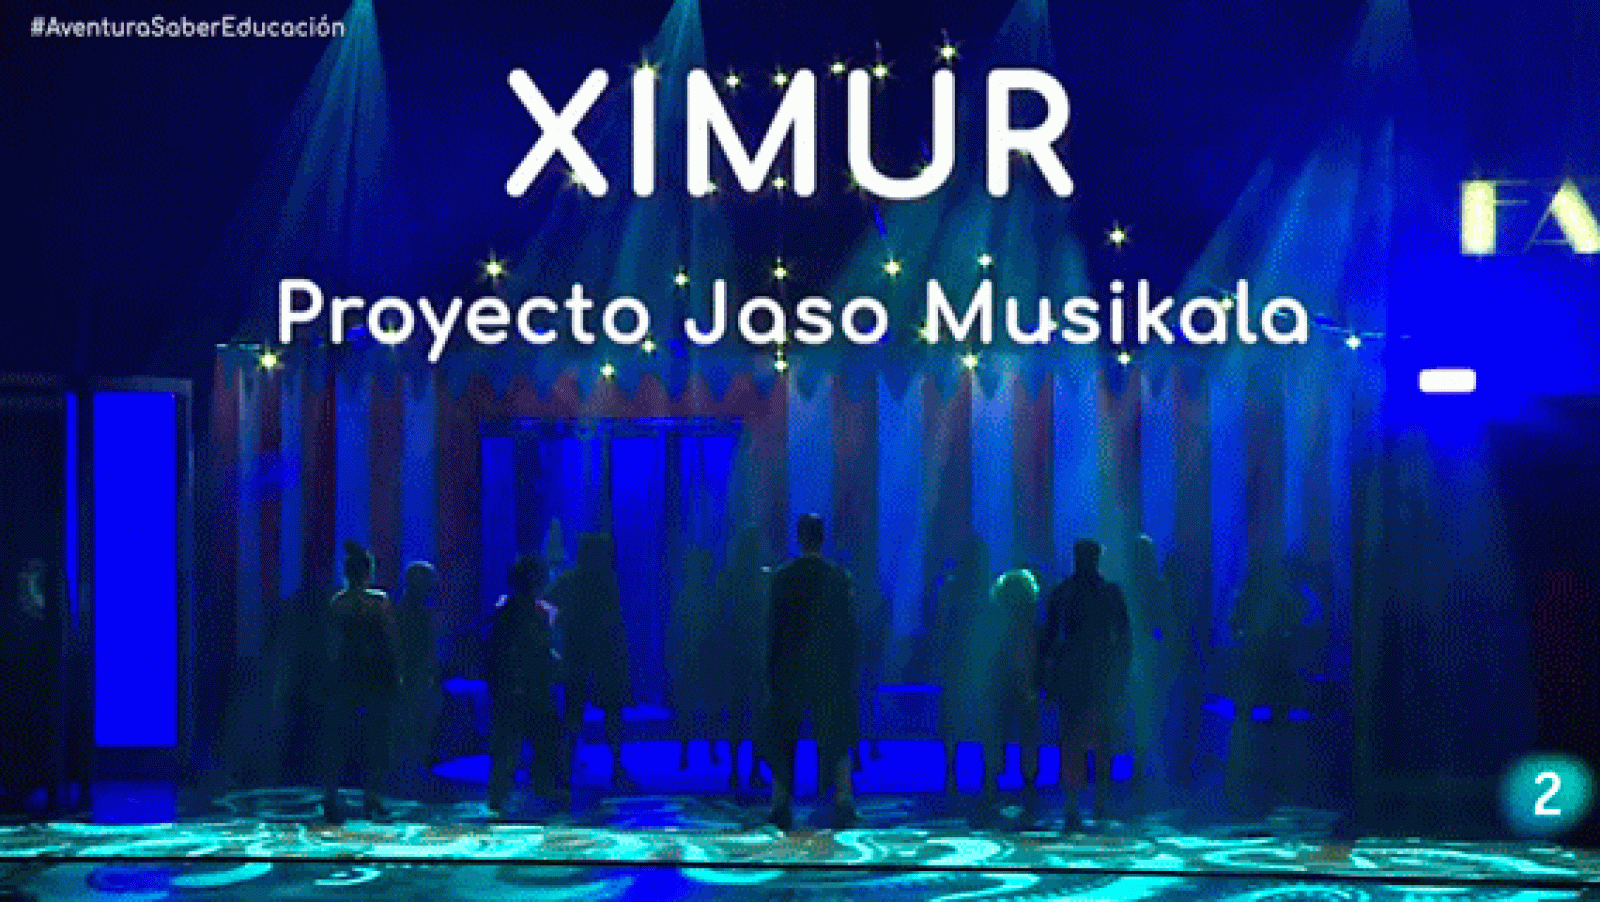 La aventura del saber - Jaso Musikala, estreno del musical 'Ximur'